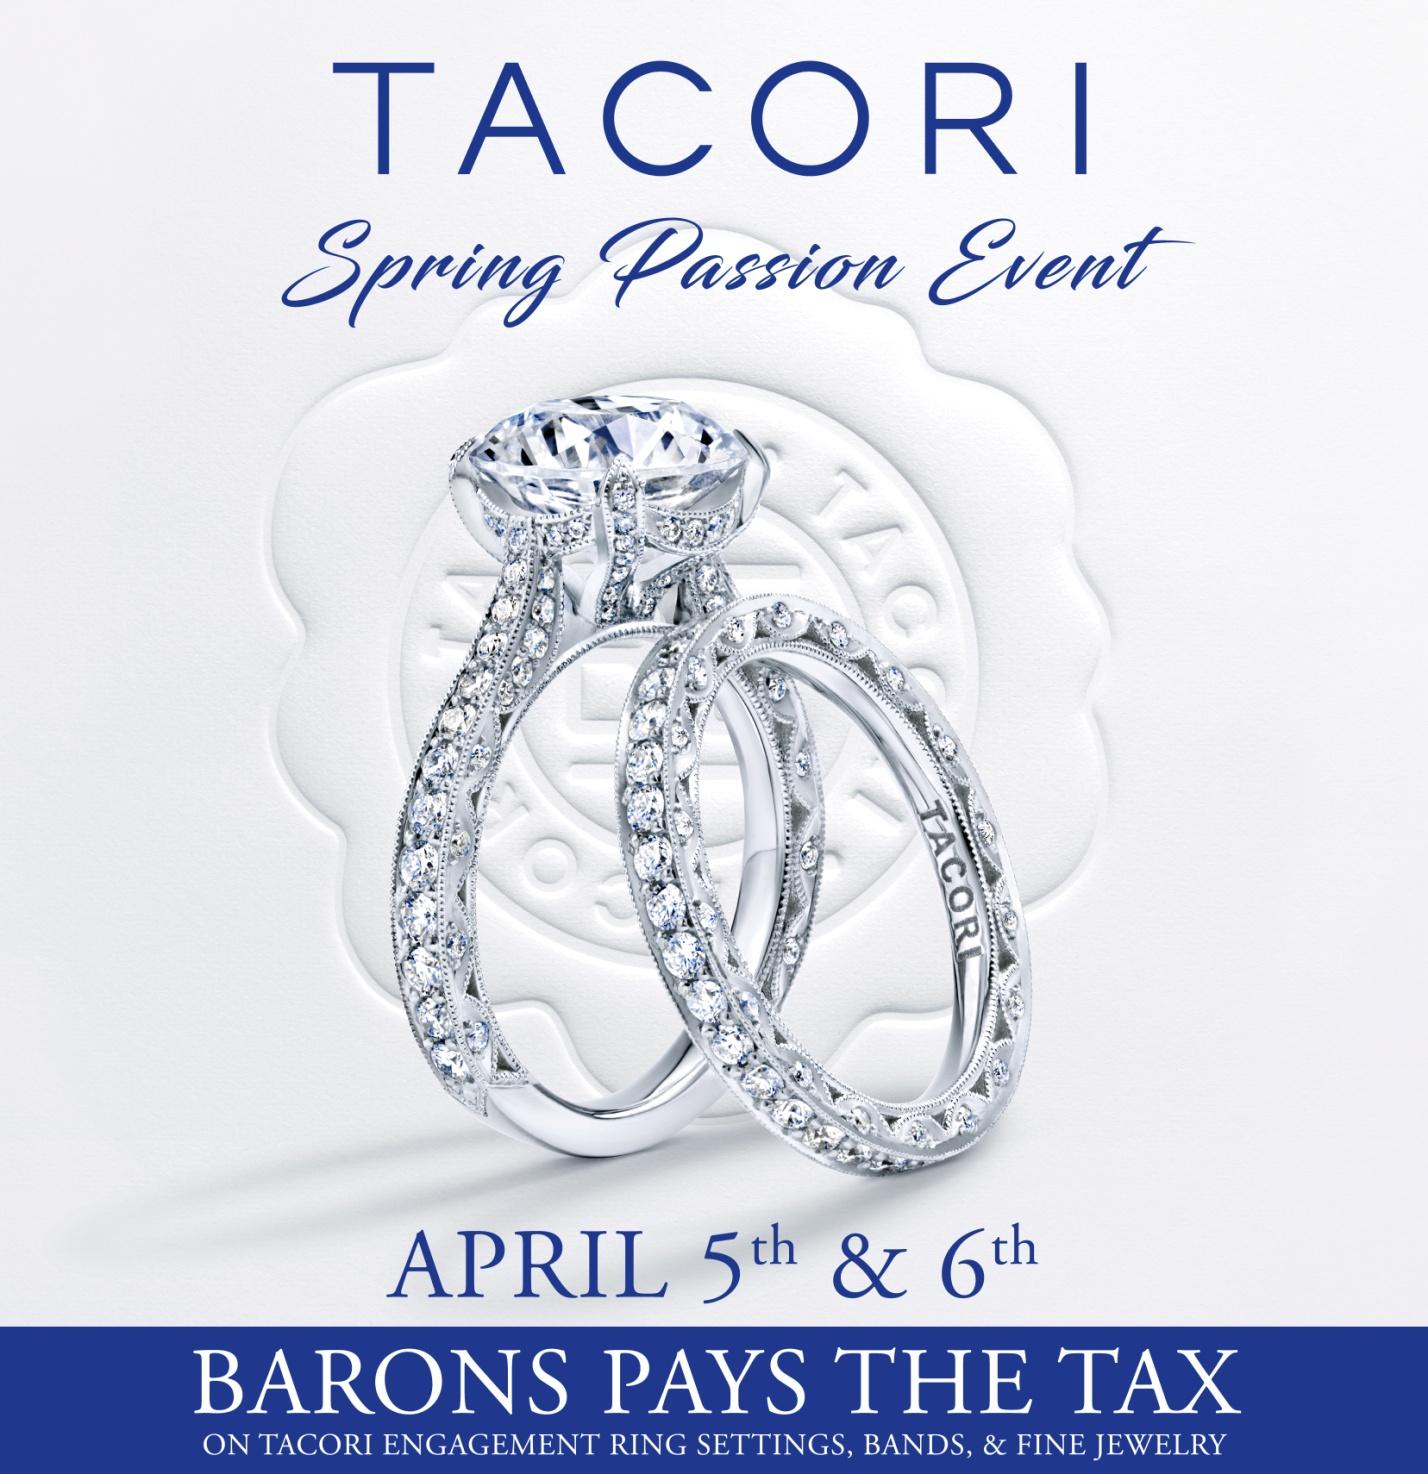 The TACORI Spring Passion Event